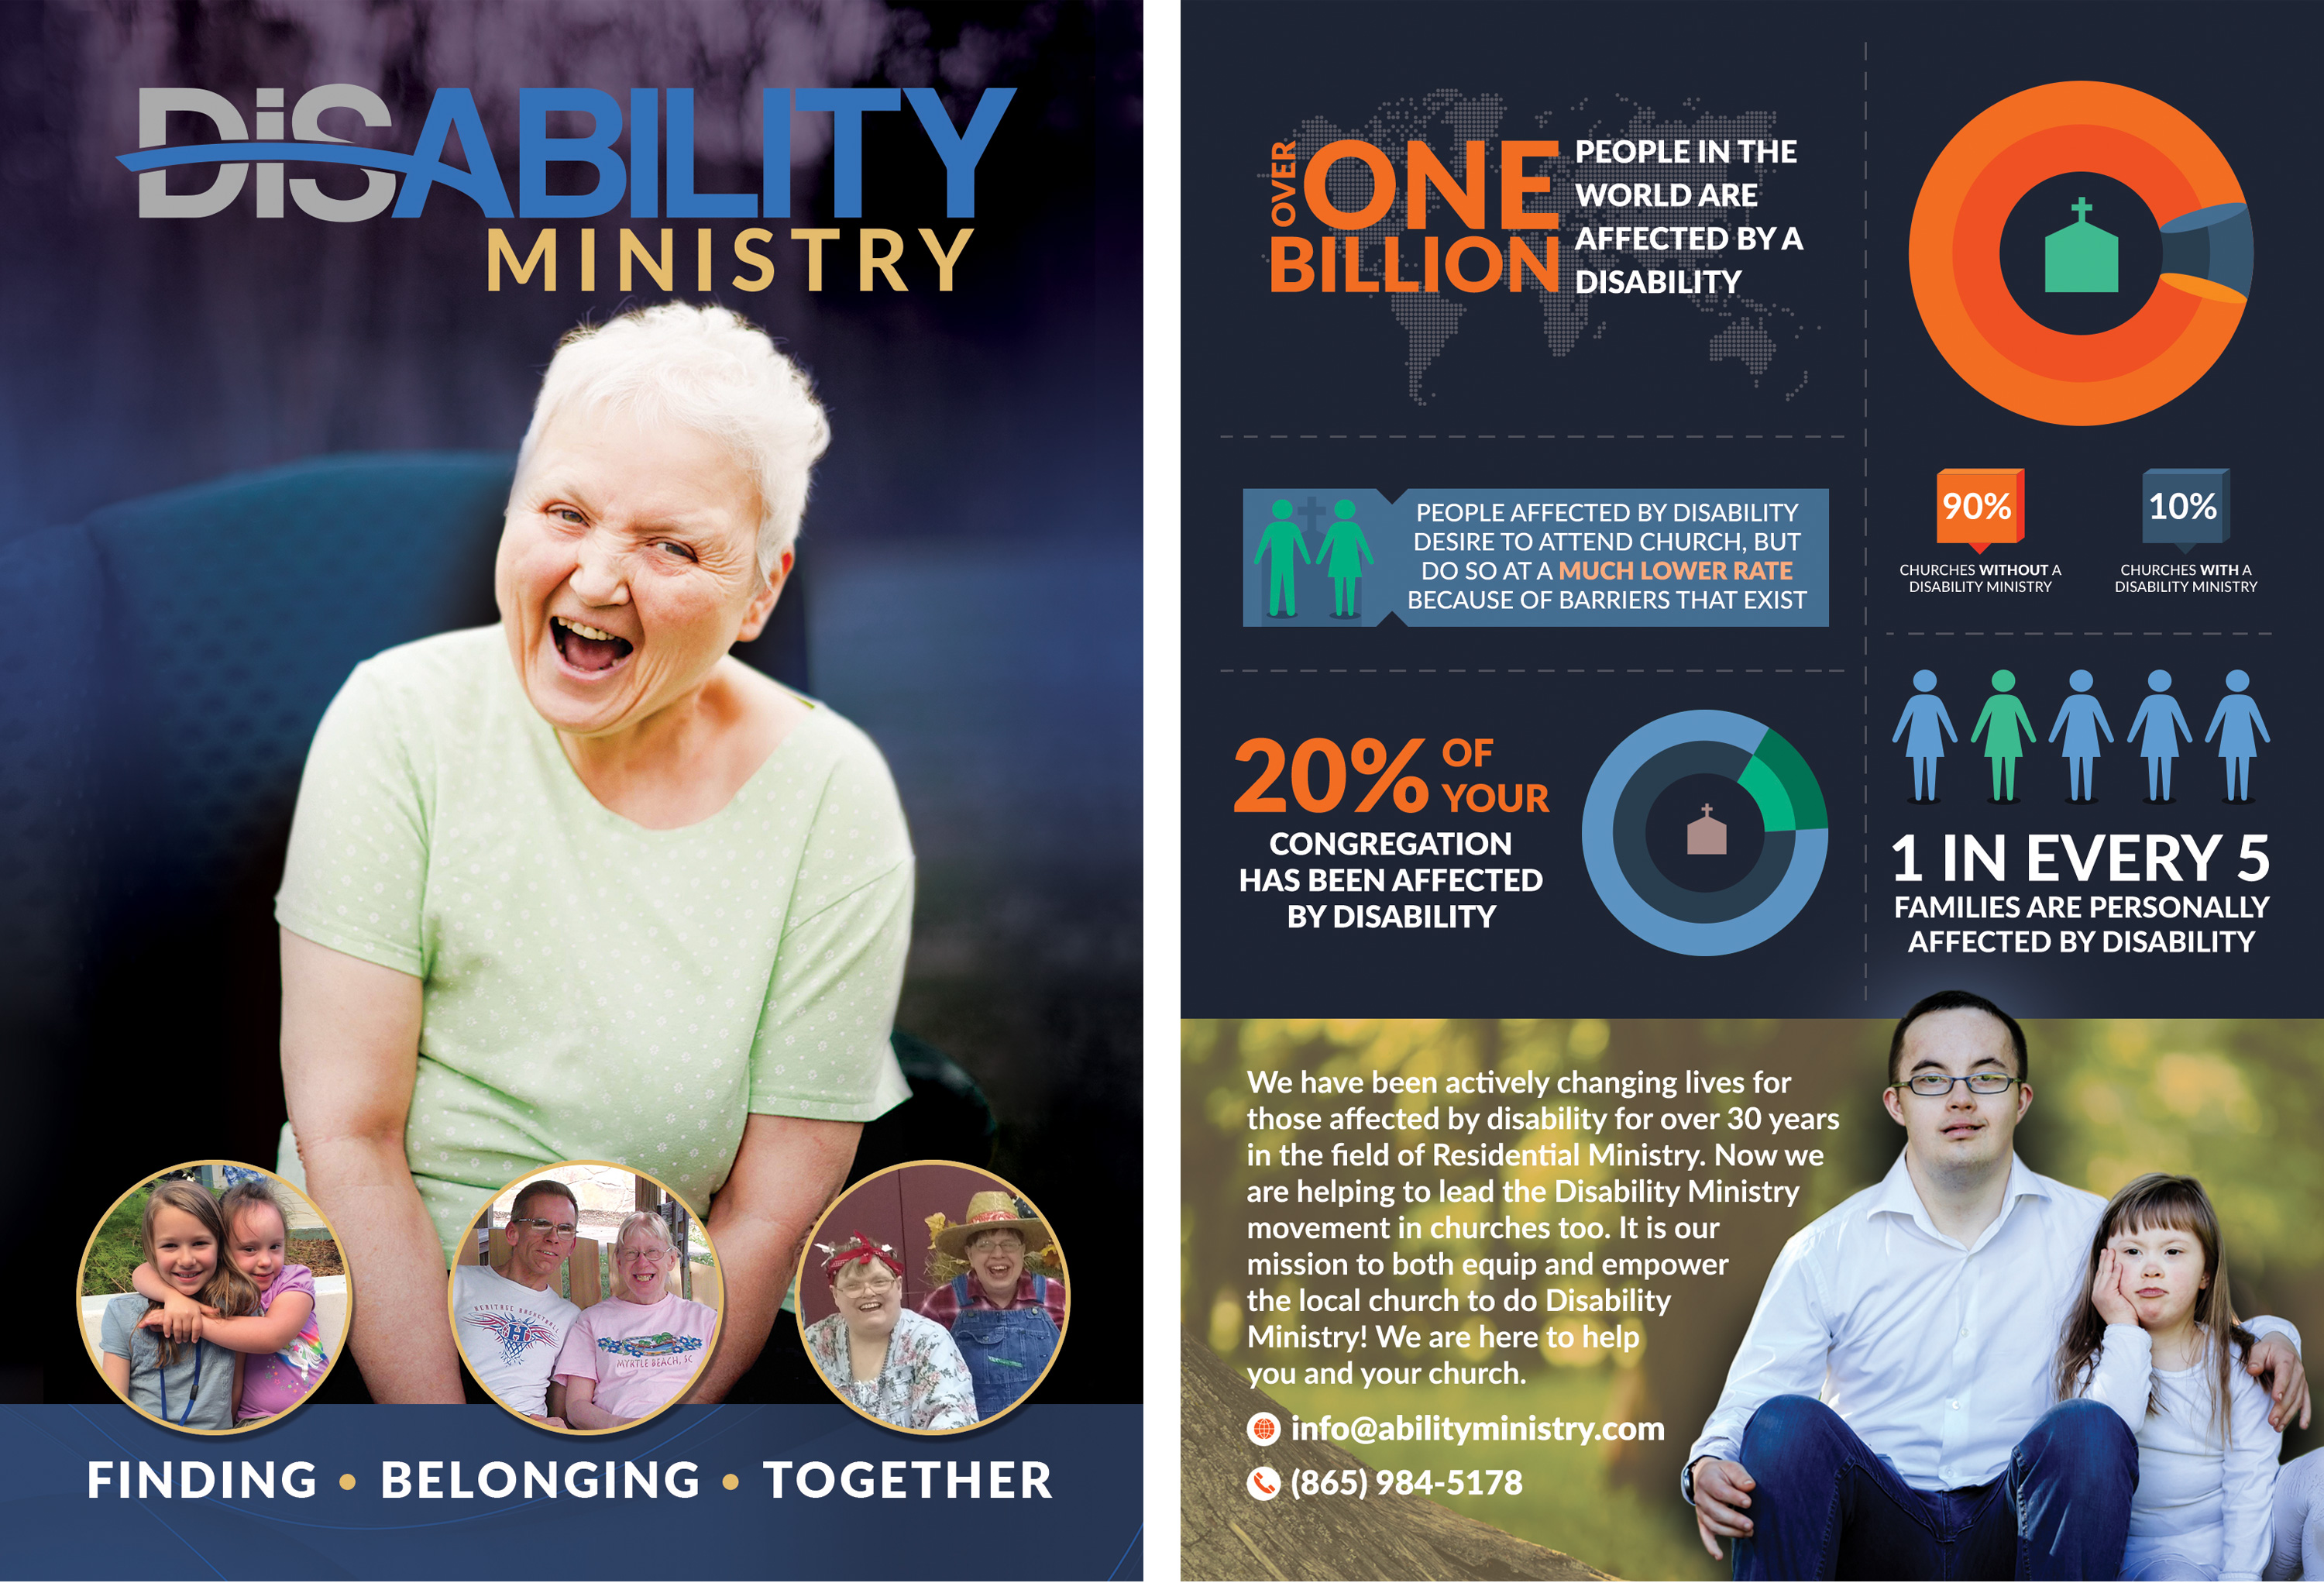 Ability Ministry Branding